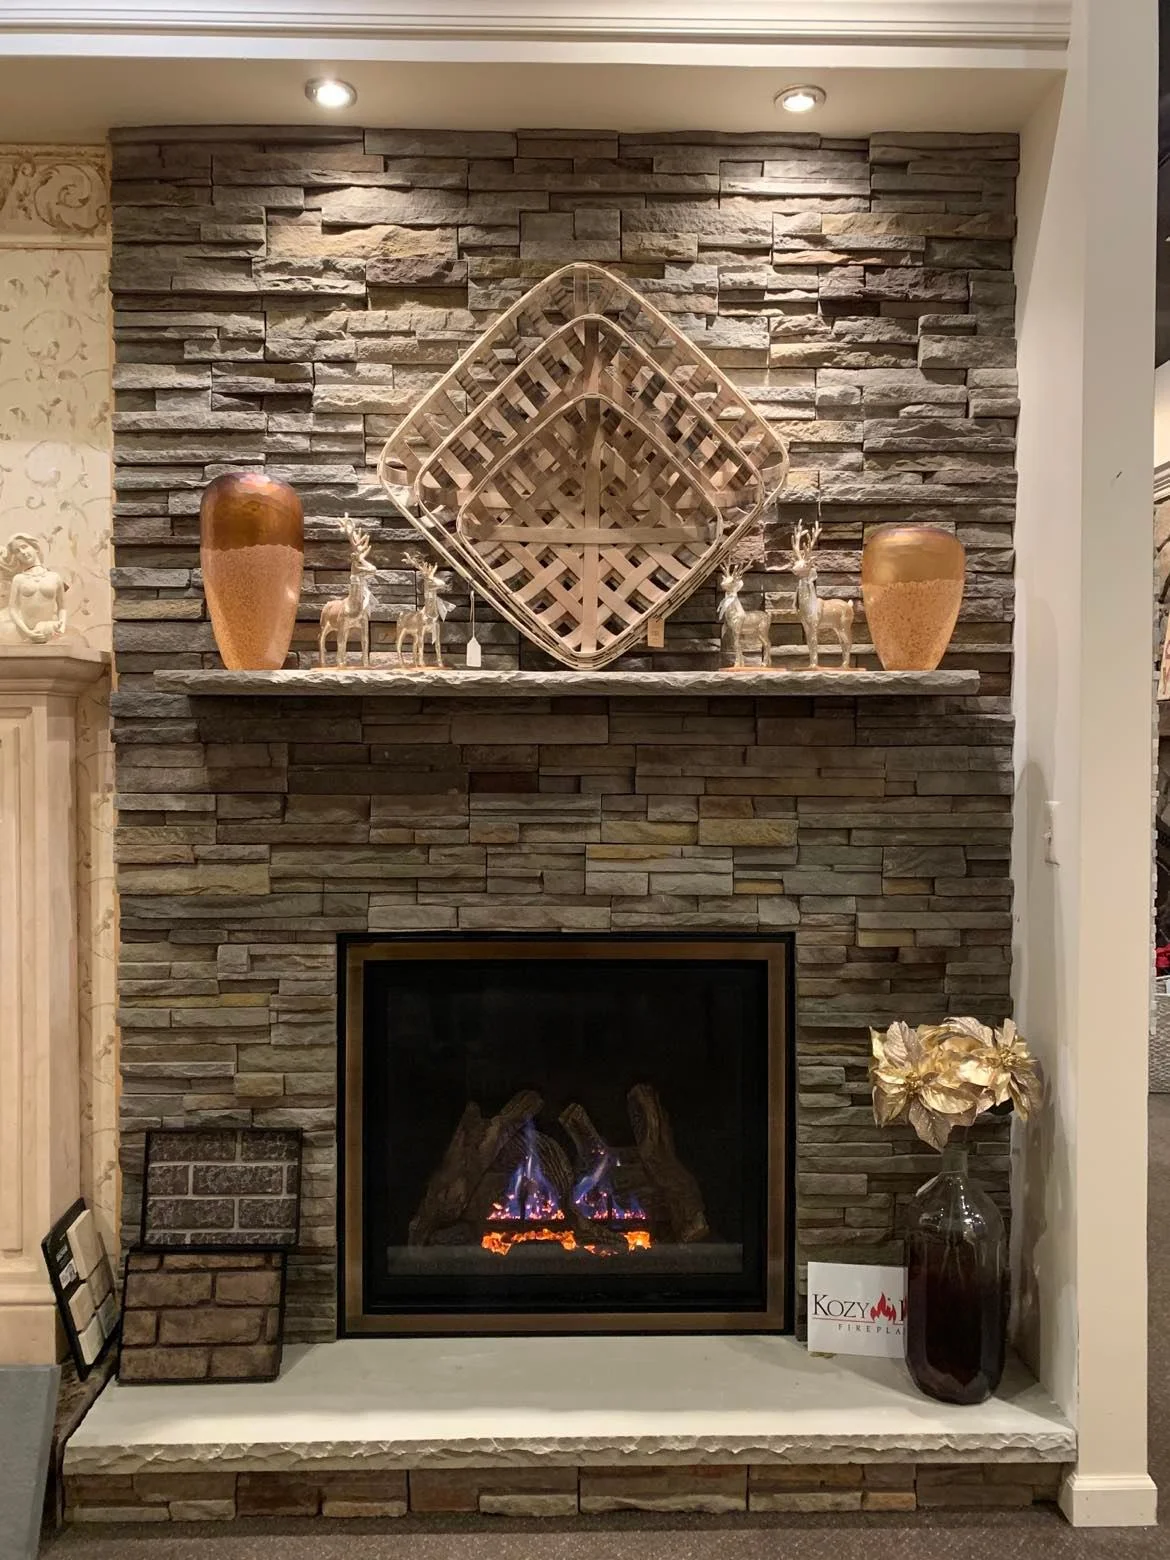 Kozy Heat Direct Vent Fireplace- Bayport 41 has aesthetics and value.